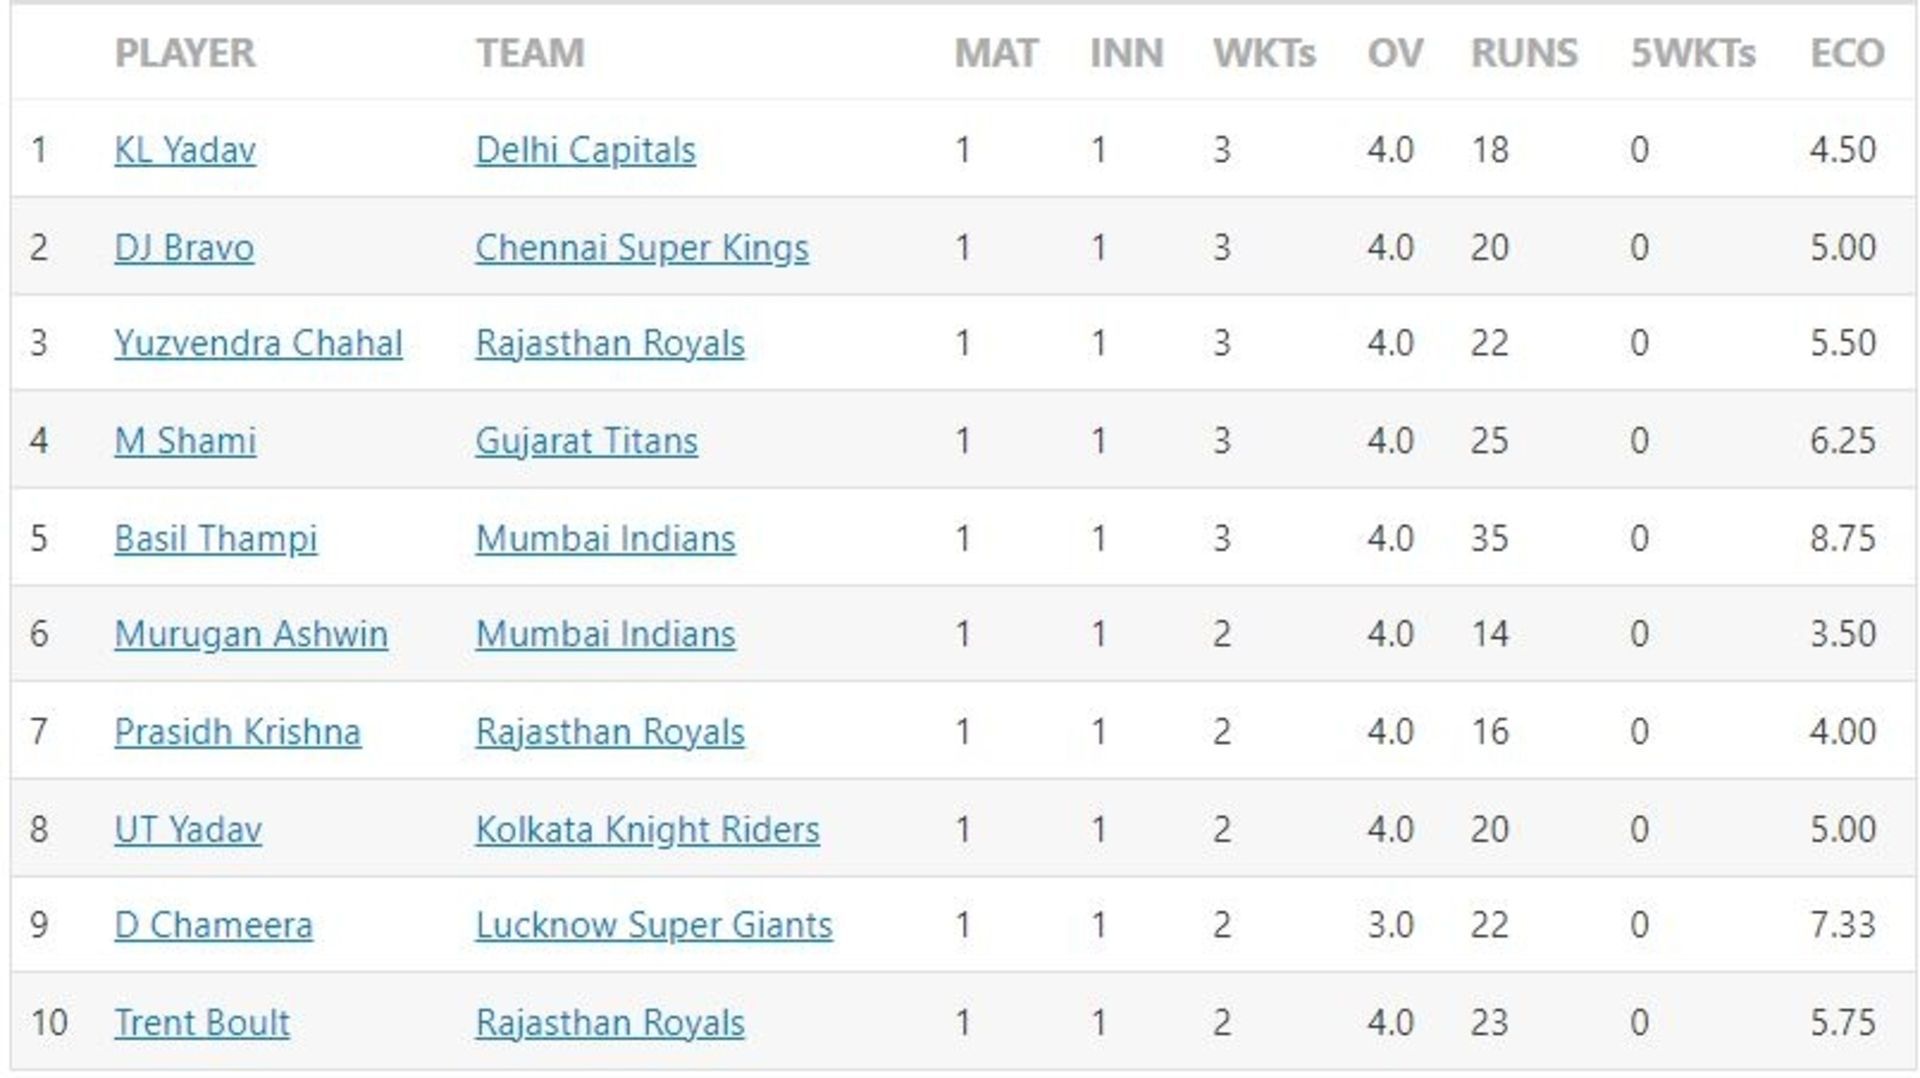 Kuldeep Yadav and Yuzvendra Chahal both mark their presence in the list with 3 wickets apiece